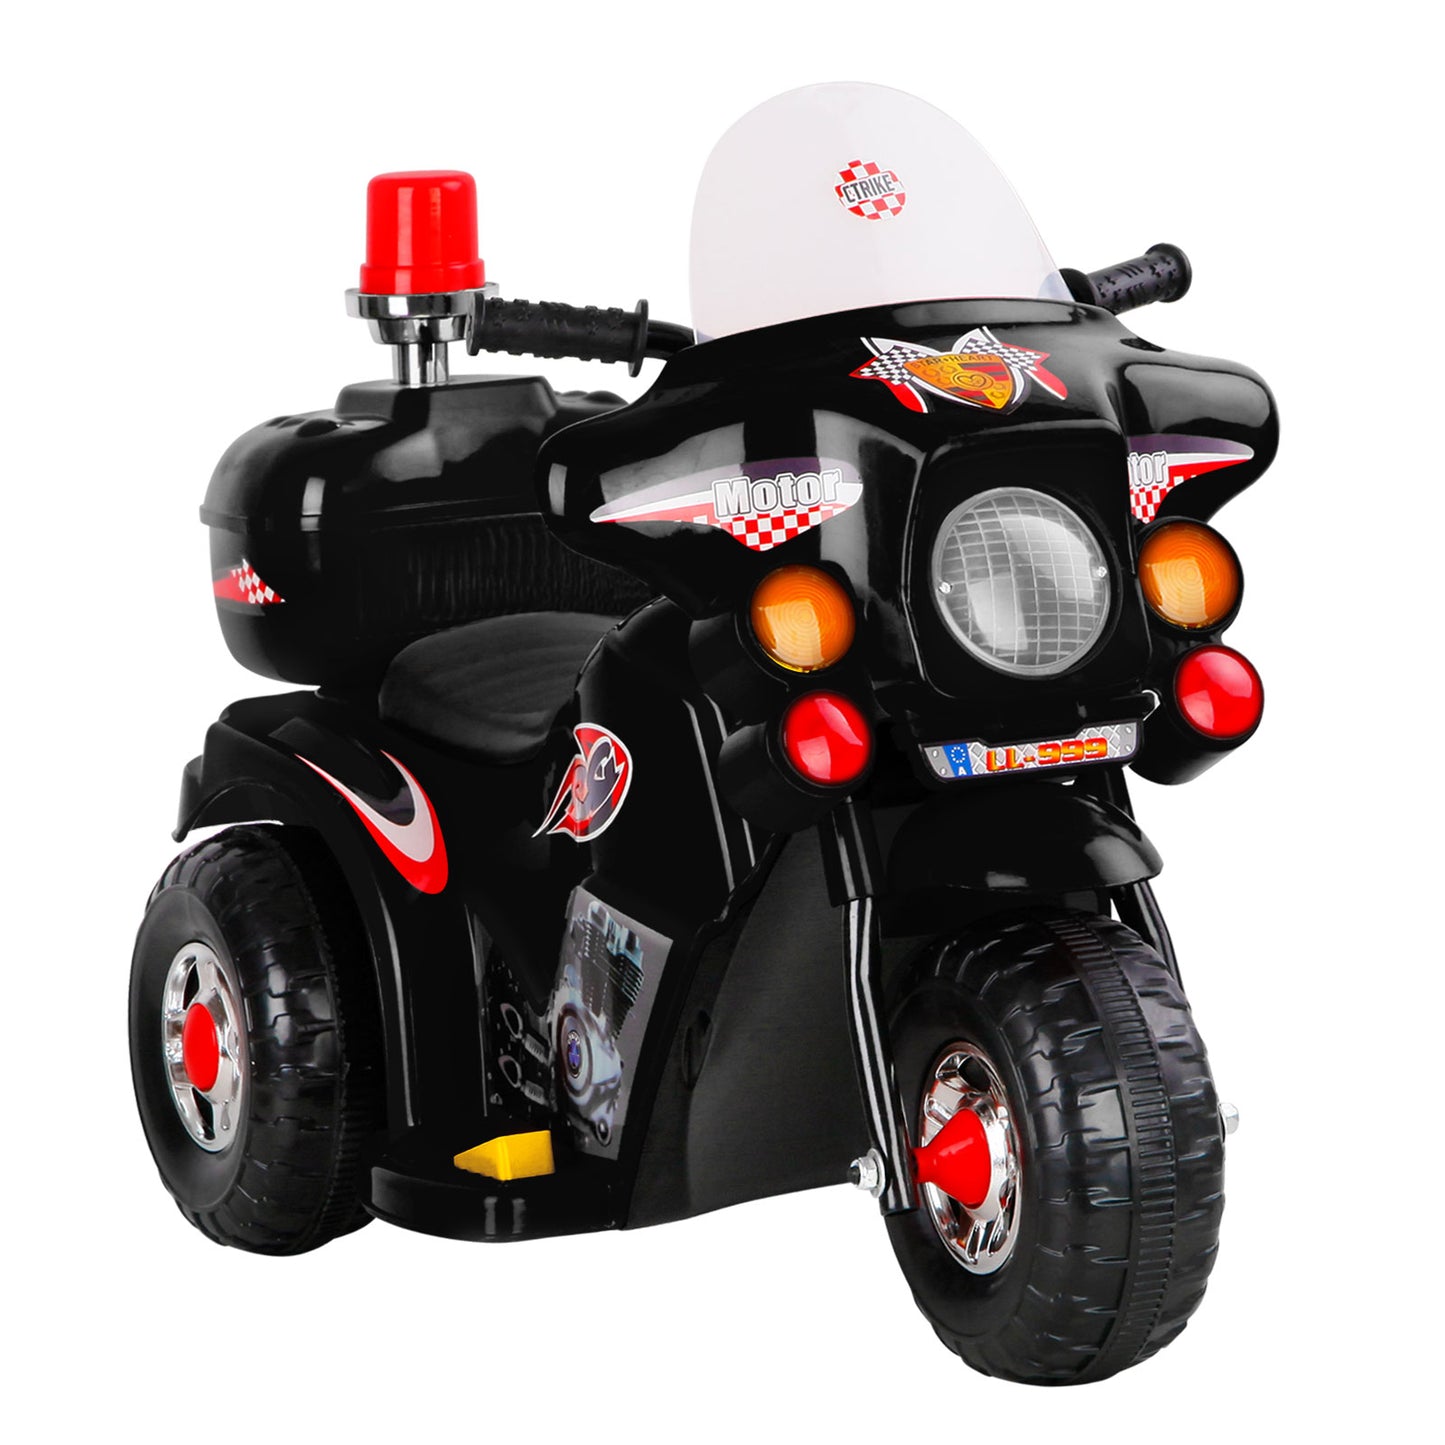 Kids Ride On Motorbike Motorcycle Car - Black